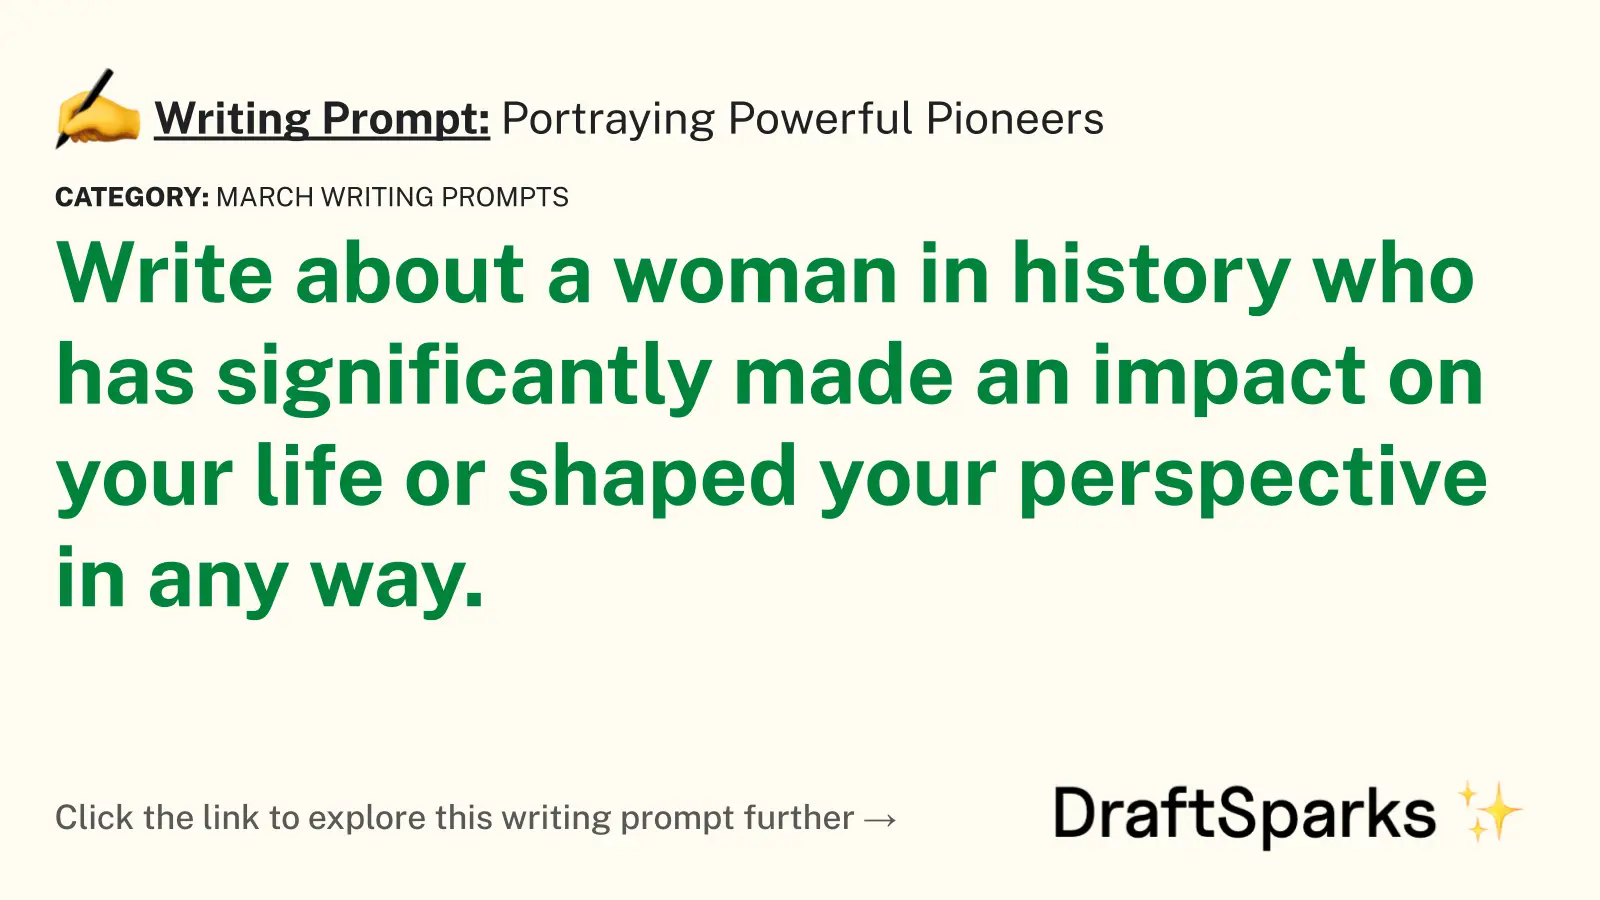 Portraying Powerful Pioneers